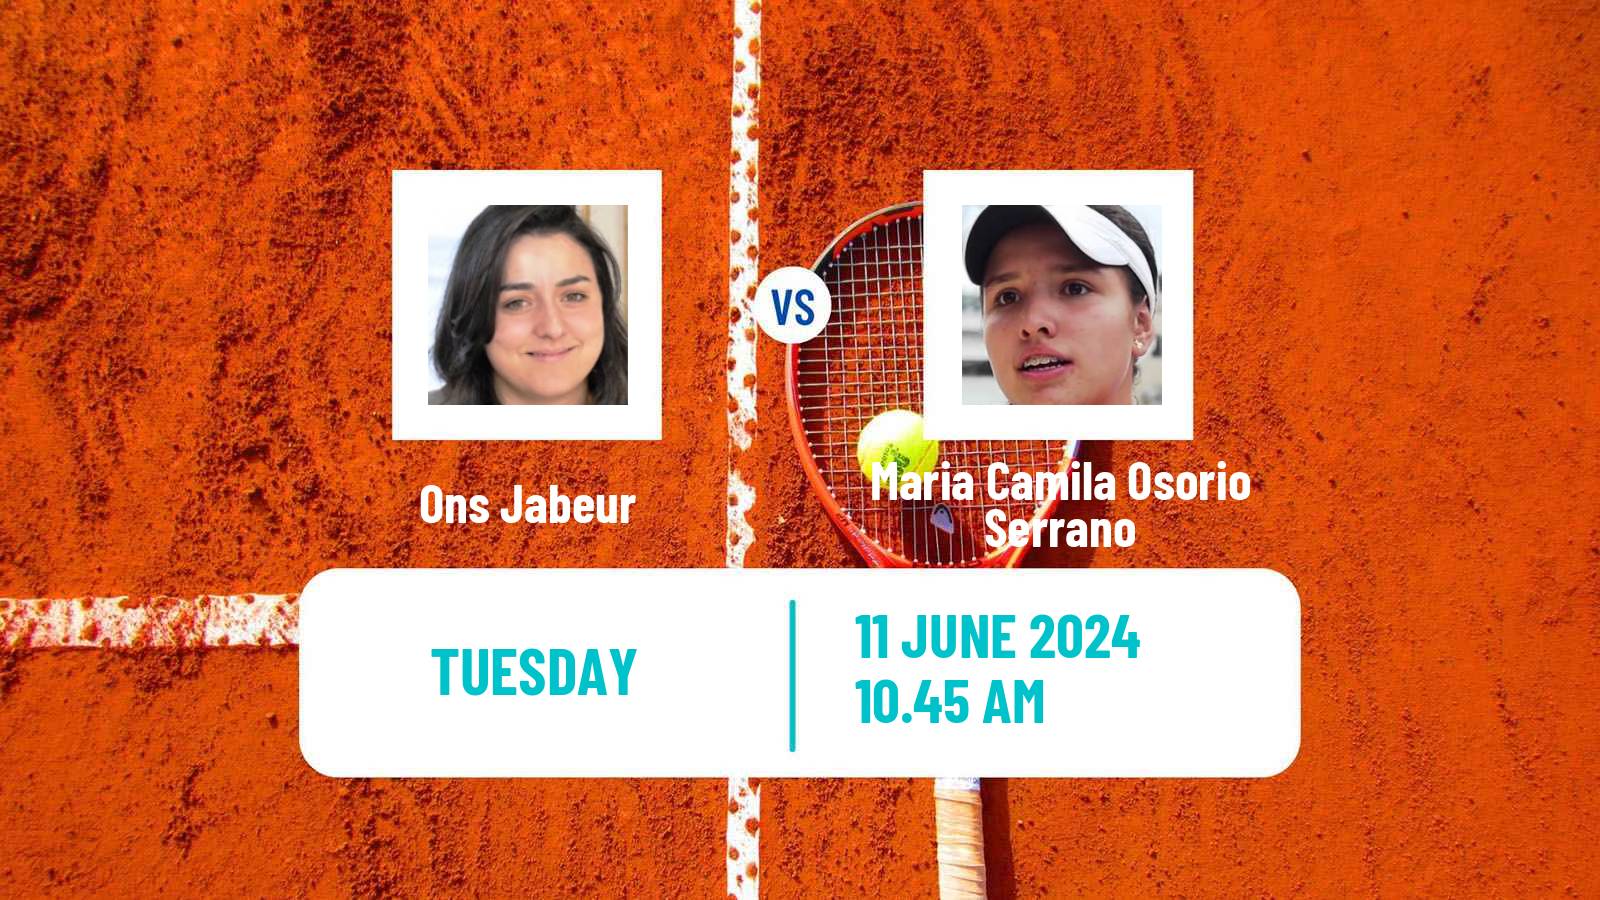 Tennis WTA Nottingham Ons Jabeur - Maria Camila Osorio Serrano